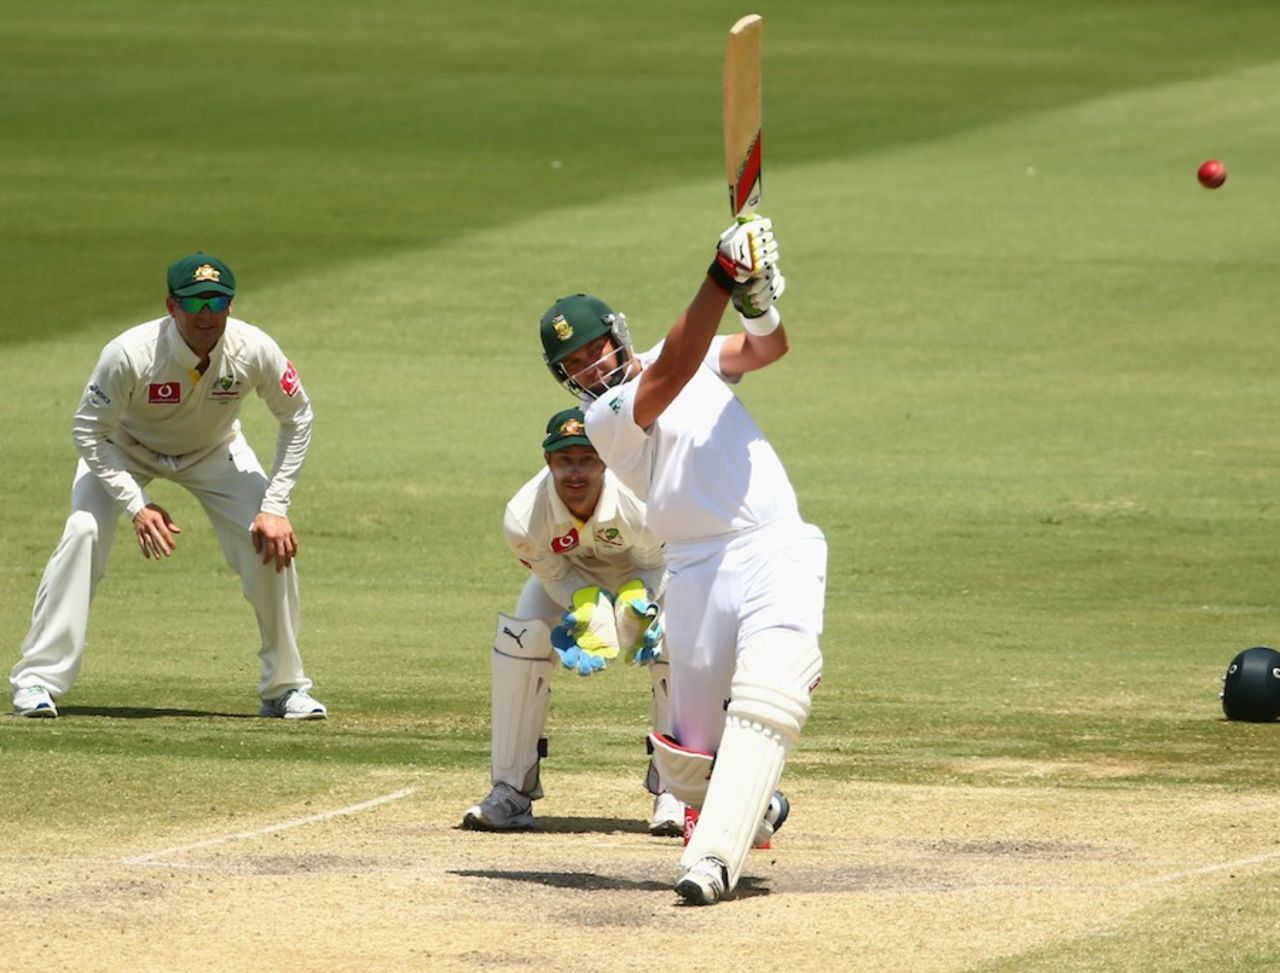 Jacques Kallis hits over the leg side, Australia v South Africa, 2nd Test, Adelaide, 5th day, November 26, 2012